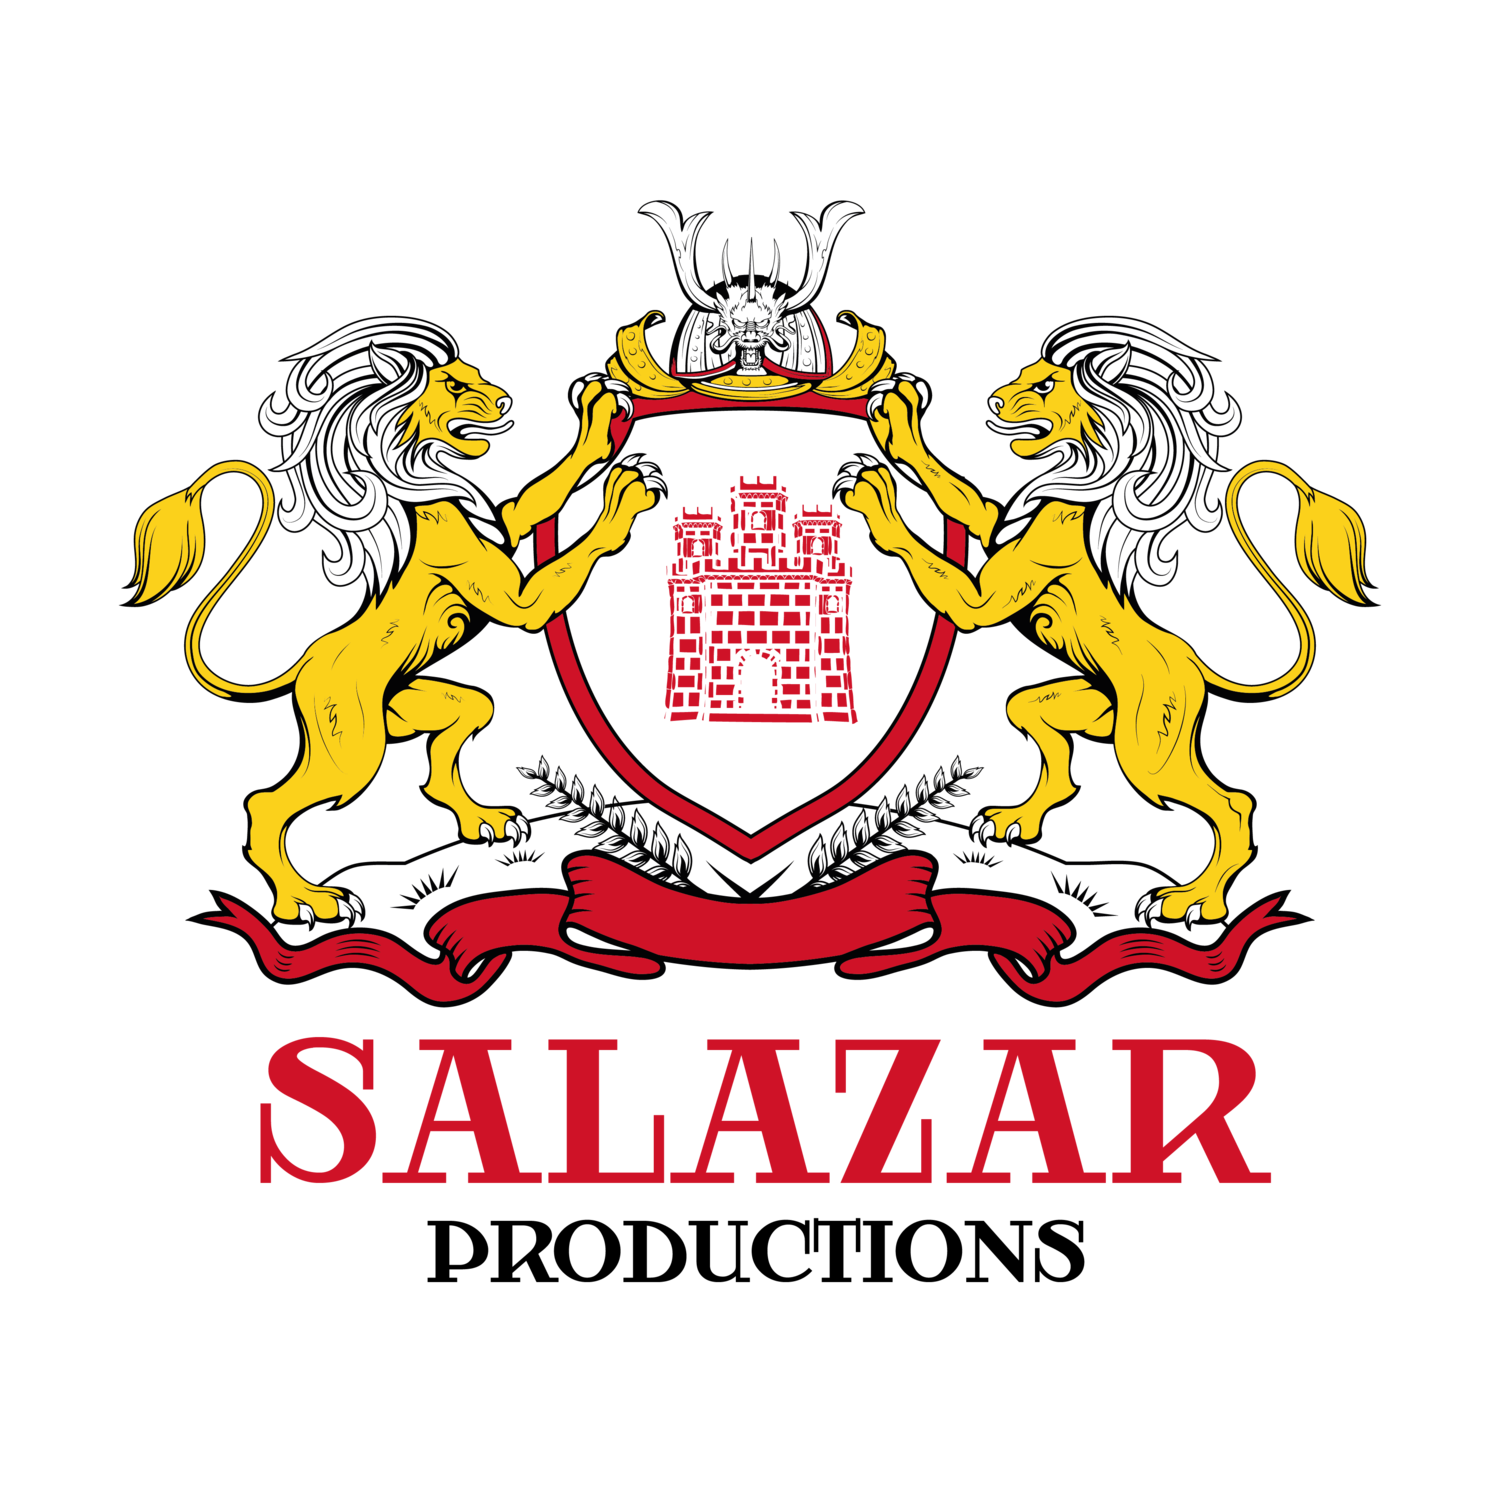 Salazar Productions